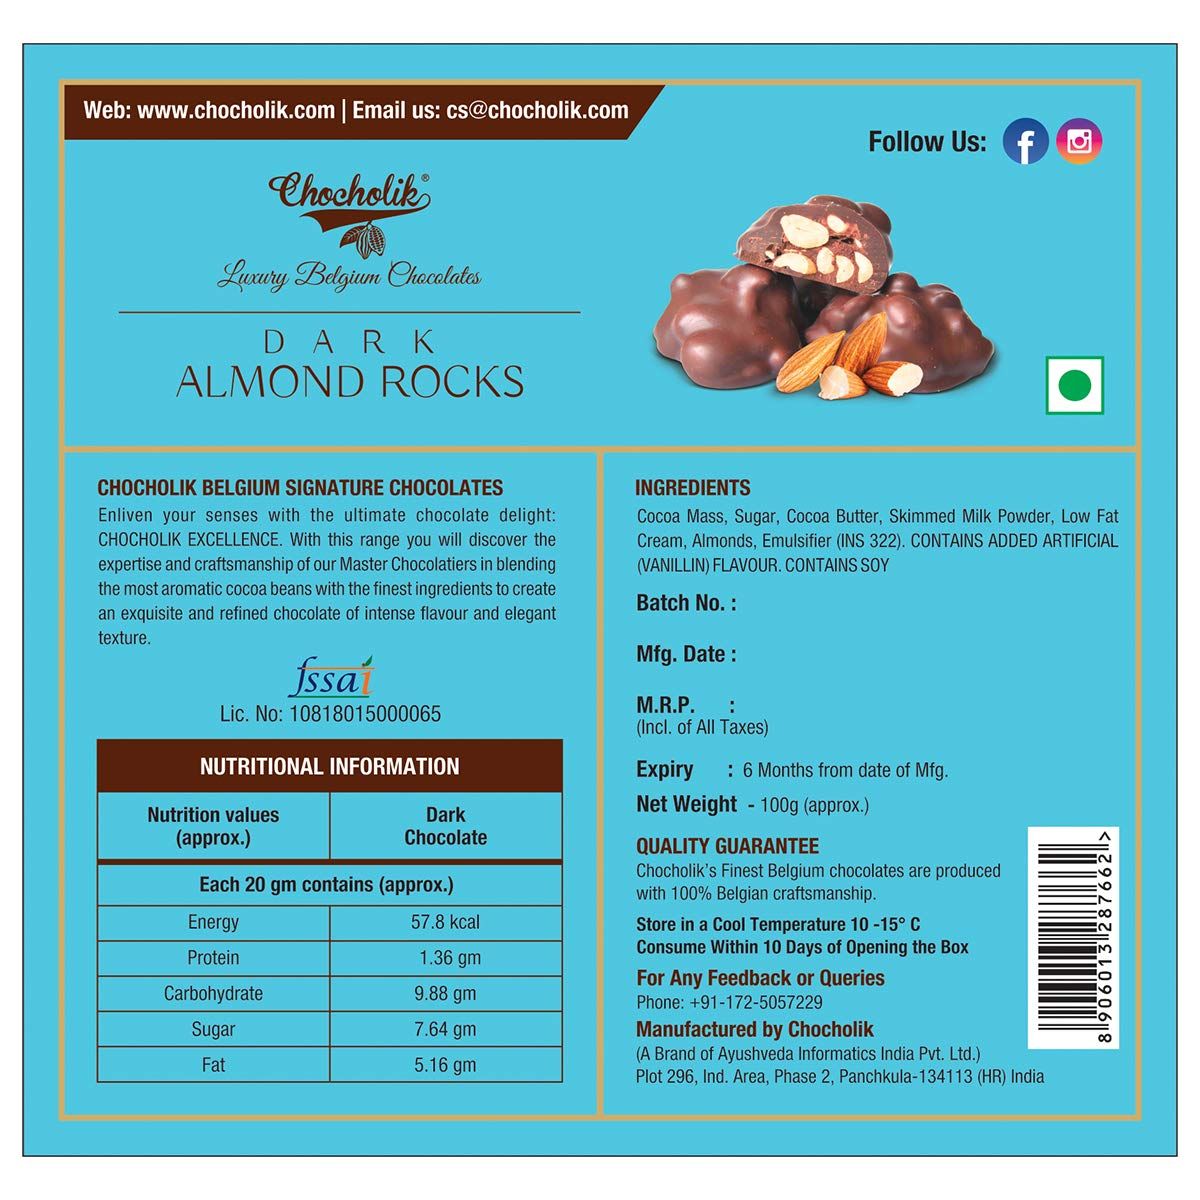 Chocholik Belgium Dark Almond Rocks Finest Chocolate Gift Image